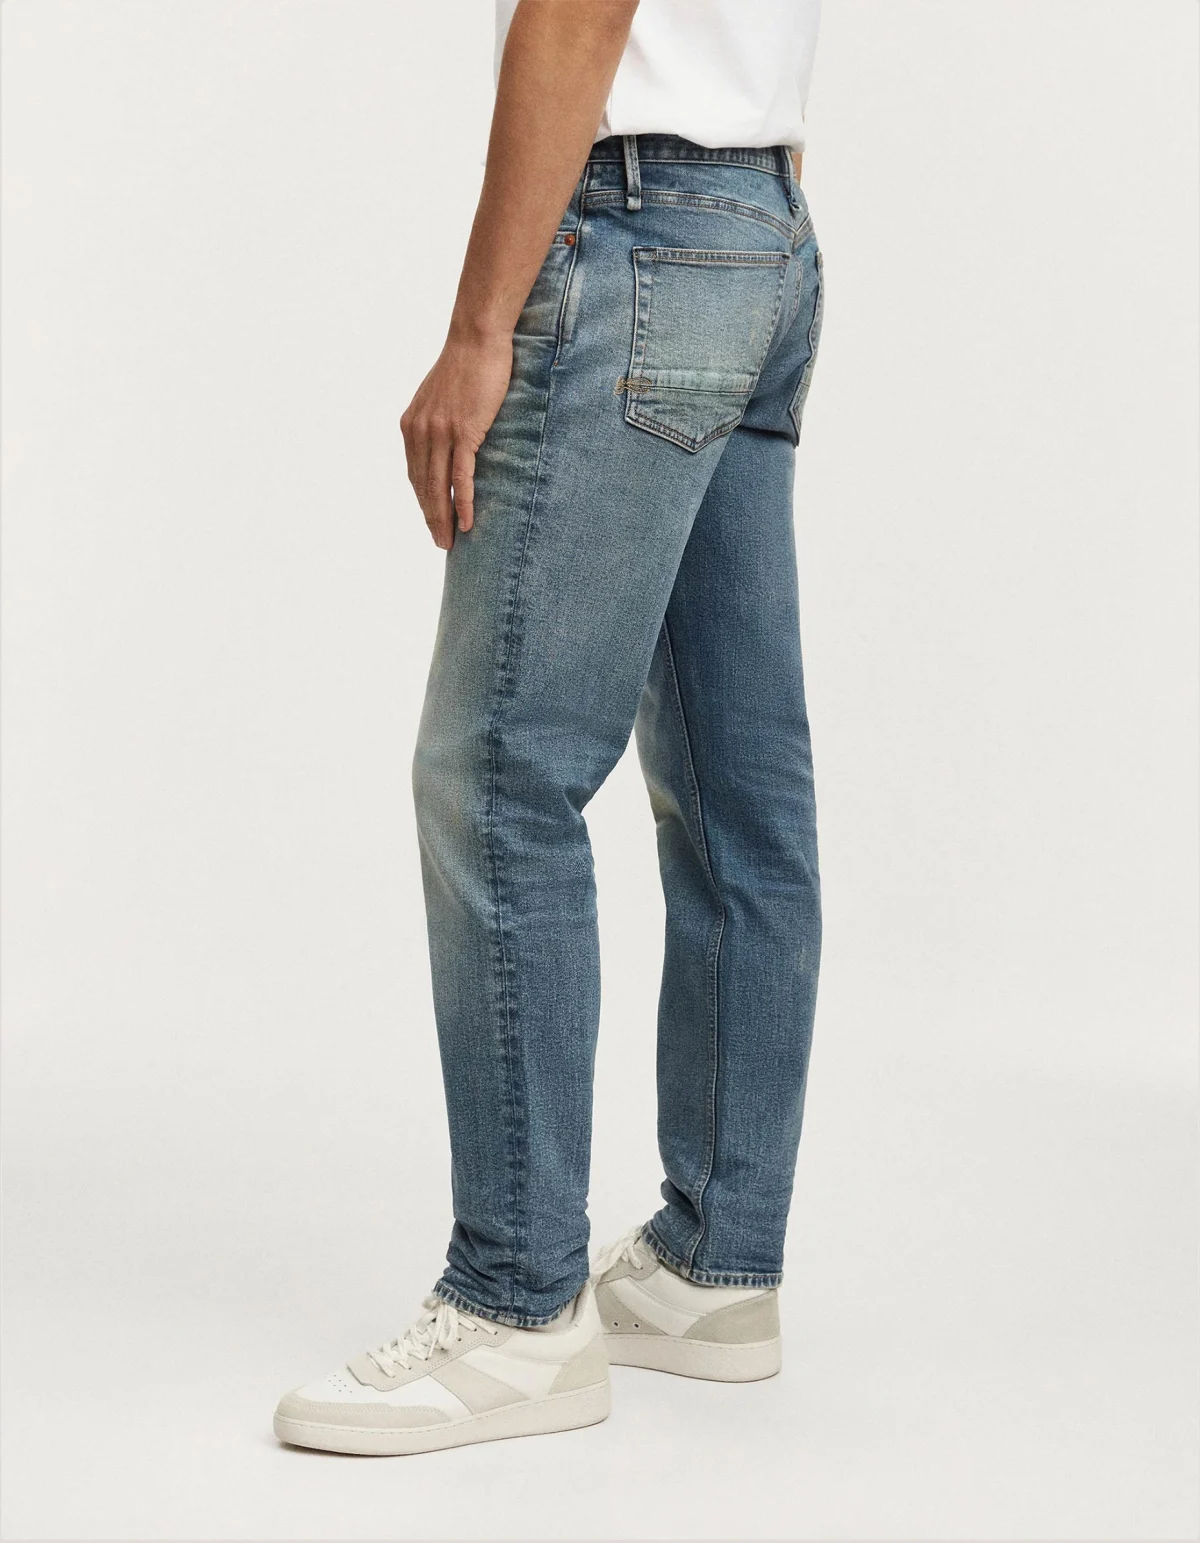 DENHAM the Jeanmaker - Premium Men's Jeans